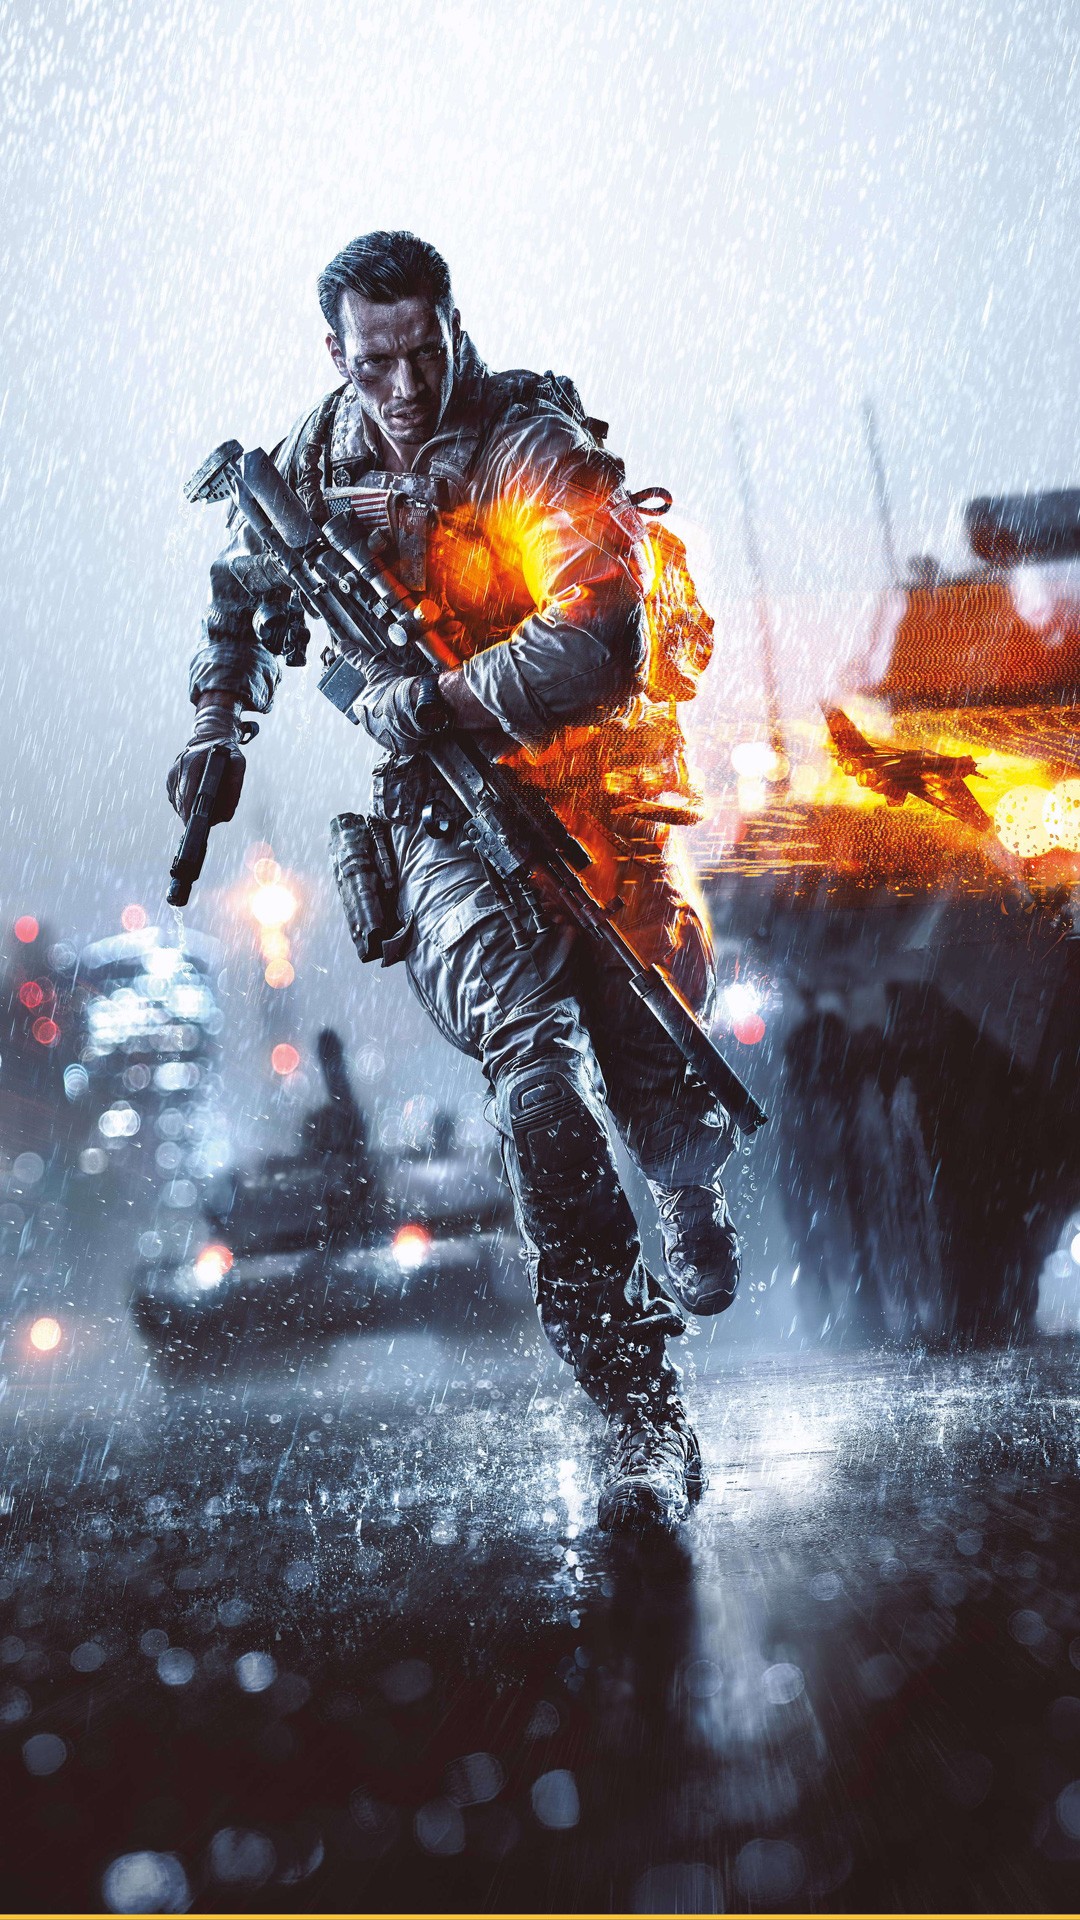 Battlefield 4 pc game download